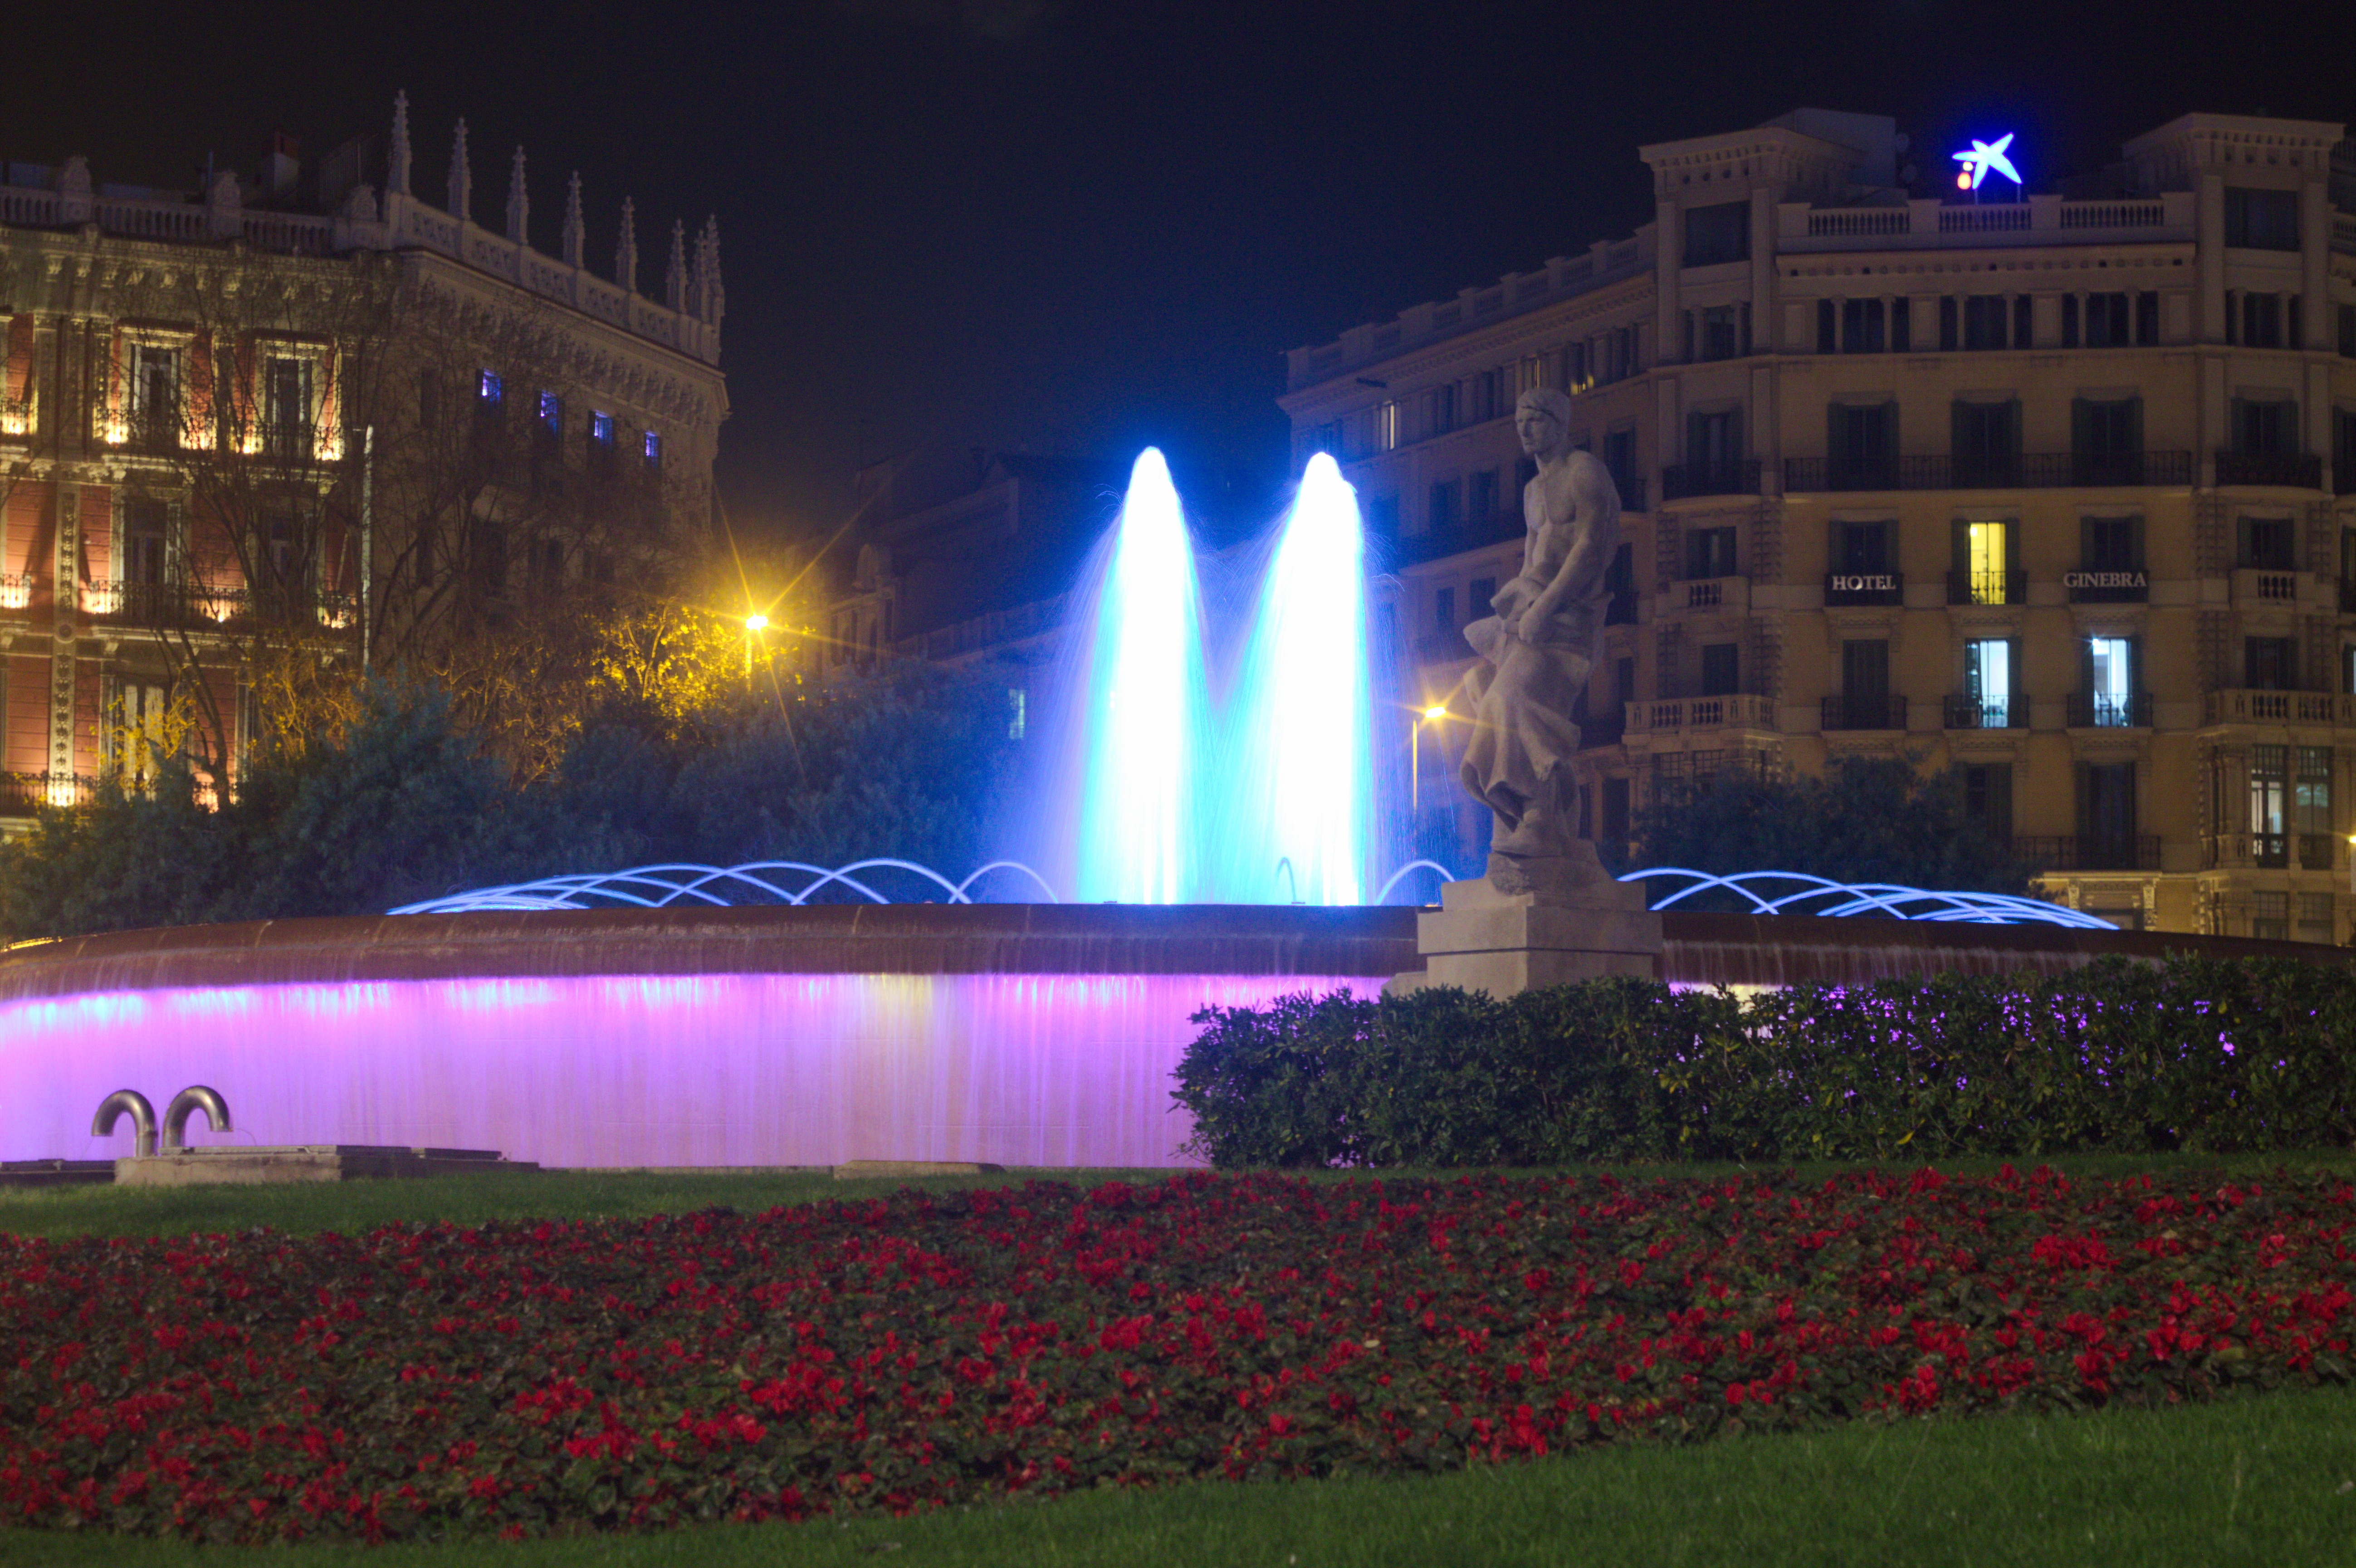 Fountain and statue at night on plaça de catalunya photo